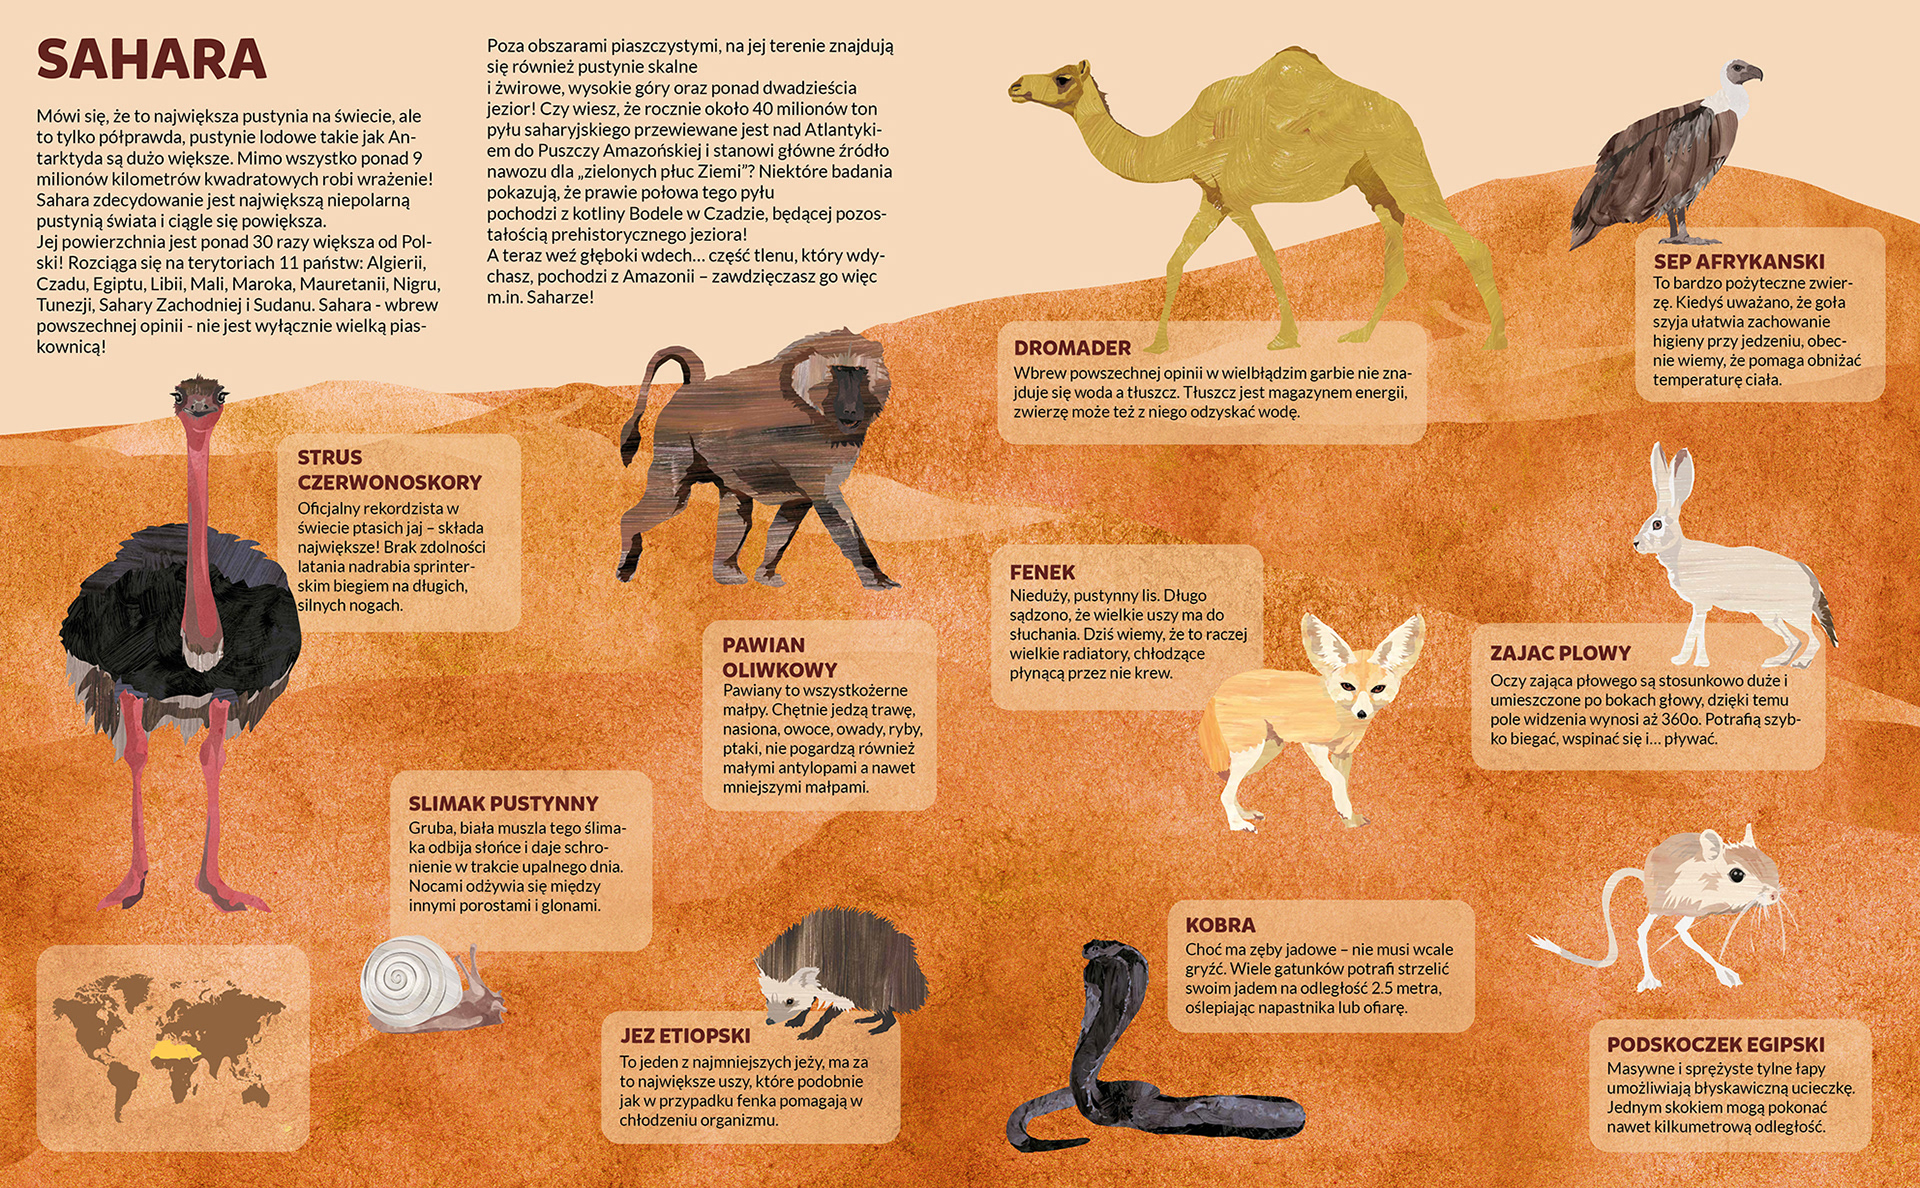 Justyna Styszyńska Illustrations - Sahara desert animals